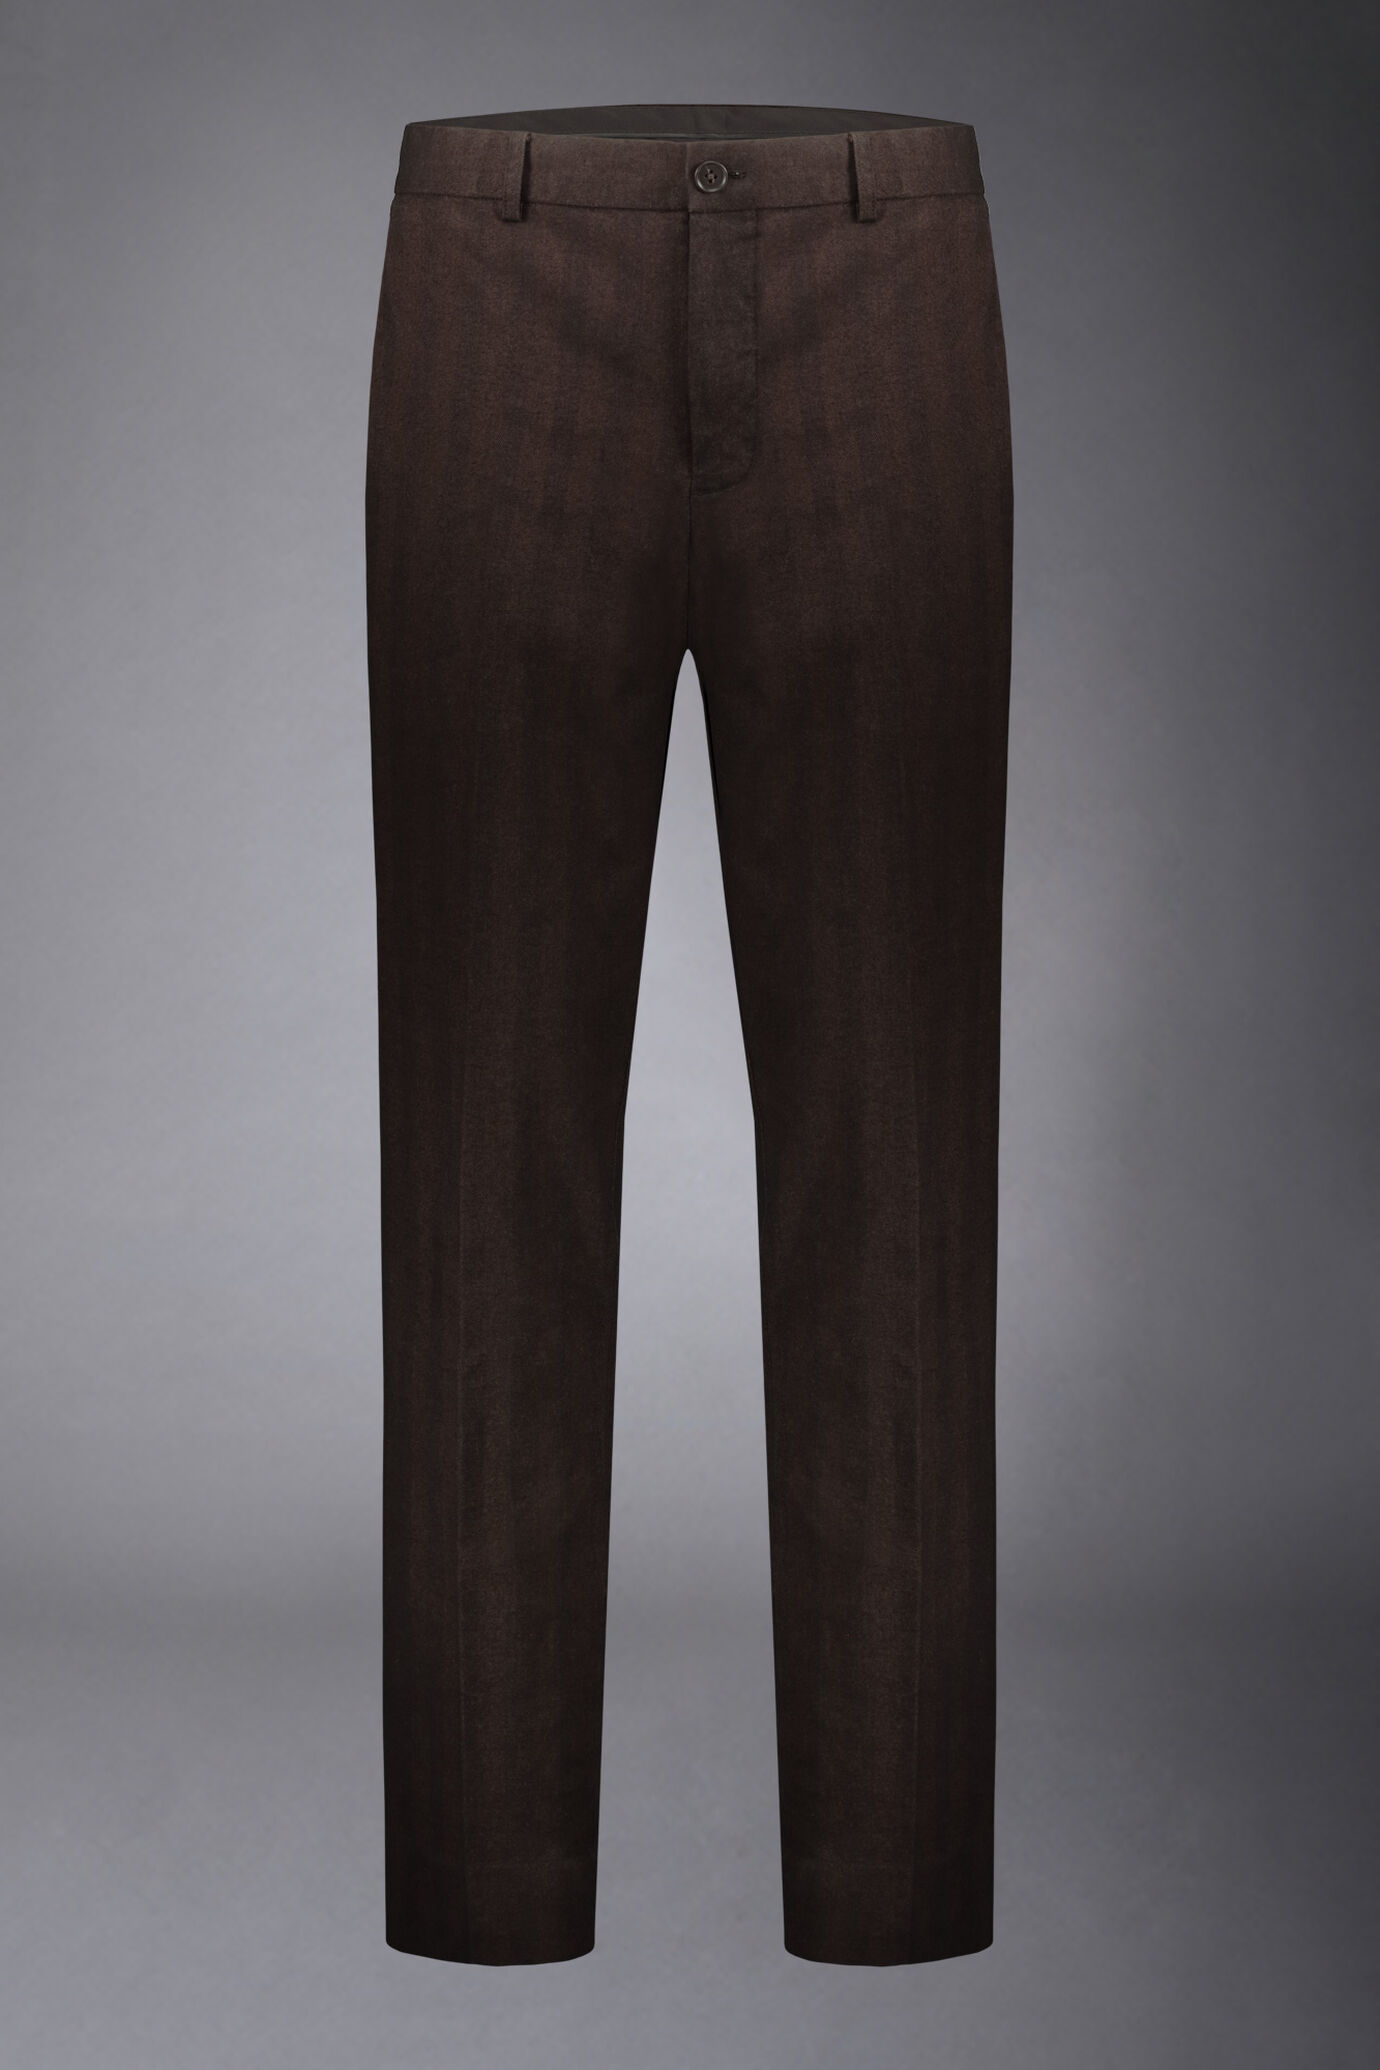 Pantalone uomo senza pinces in cotone stretch tessuto lavato disegno herringbone regular fit image number 4